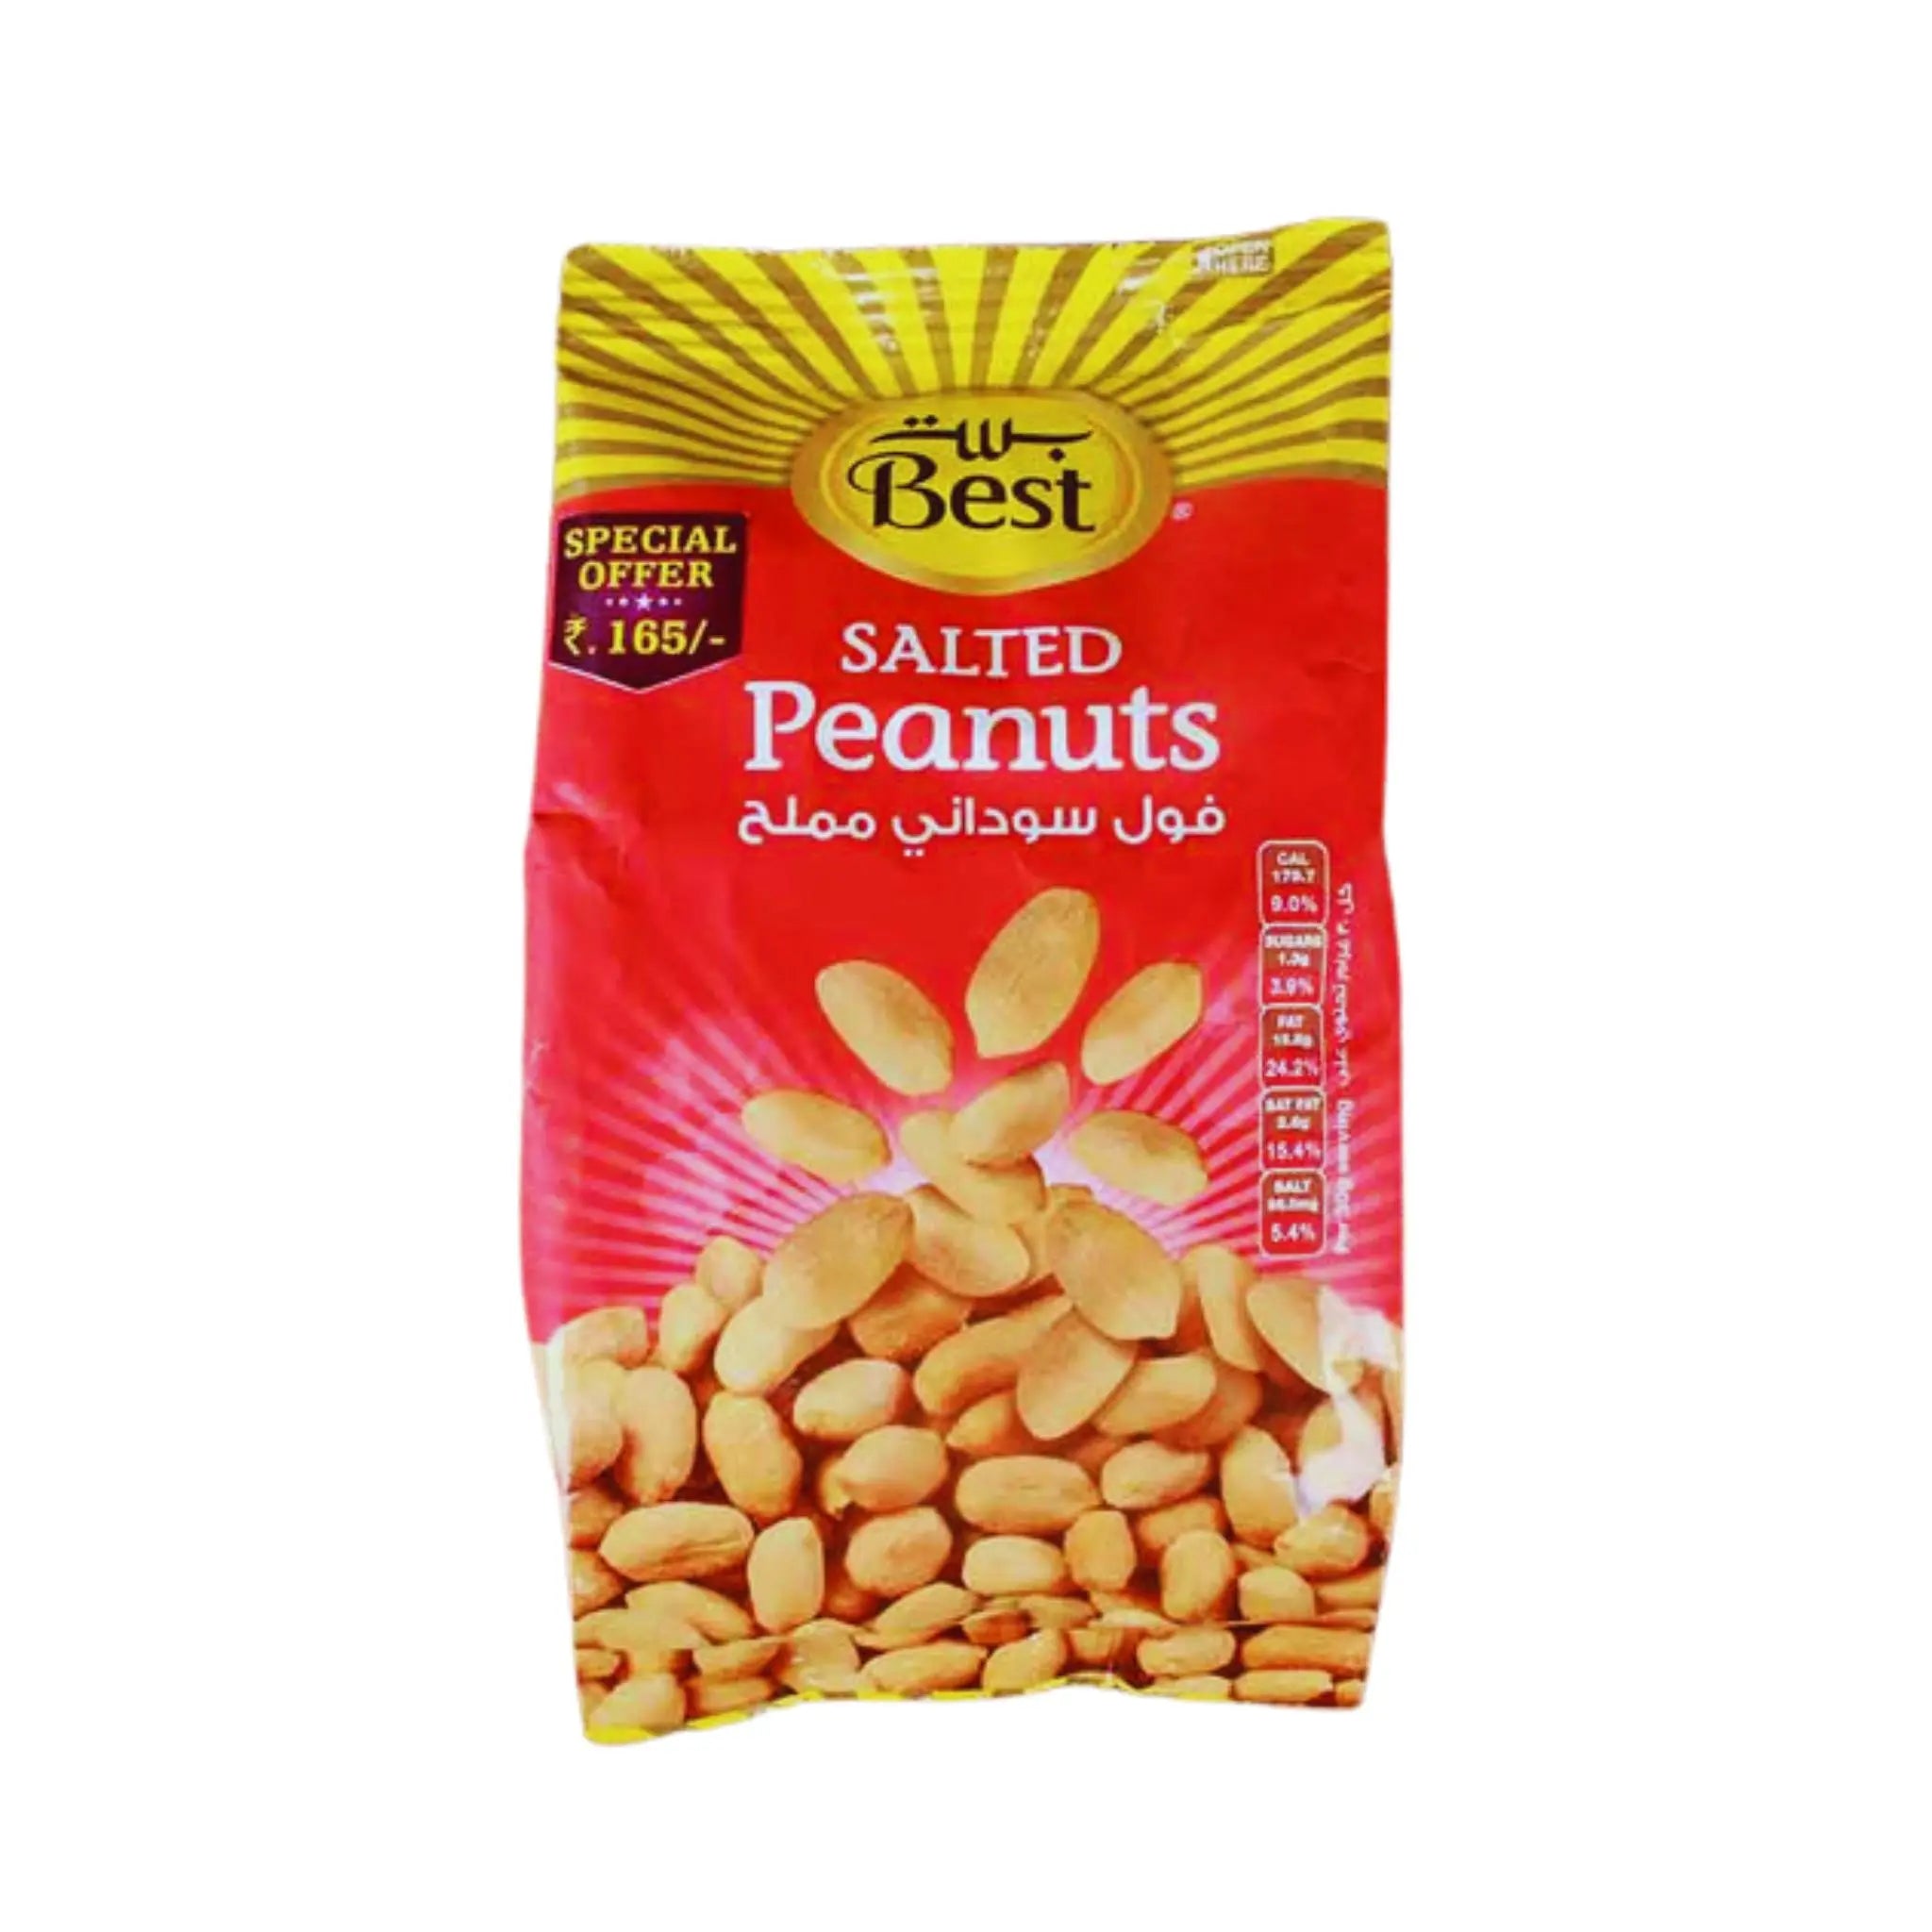 Best Salted Peanuts - 4x6x150g (1 carton) Marino.AE